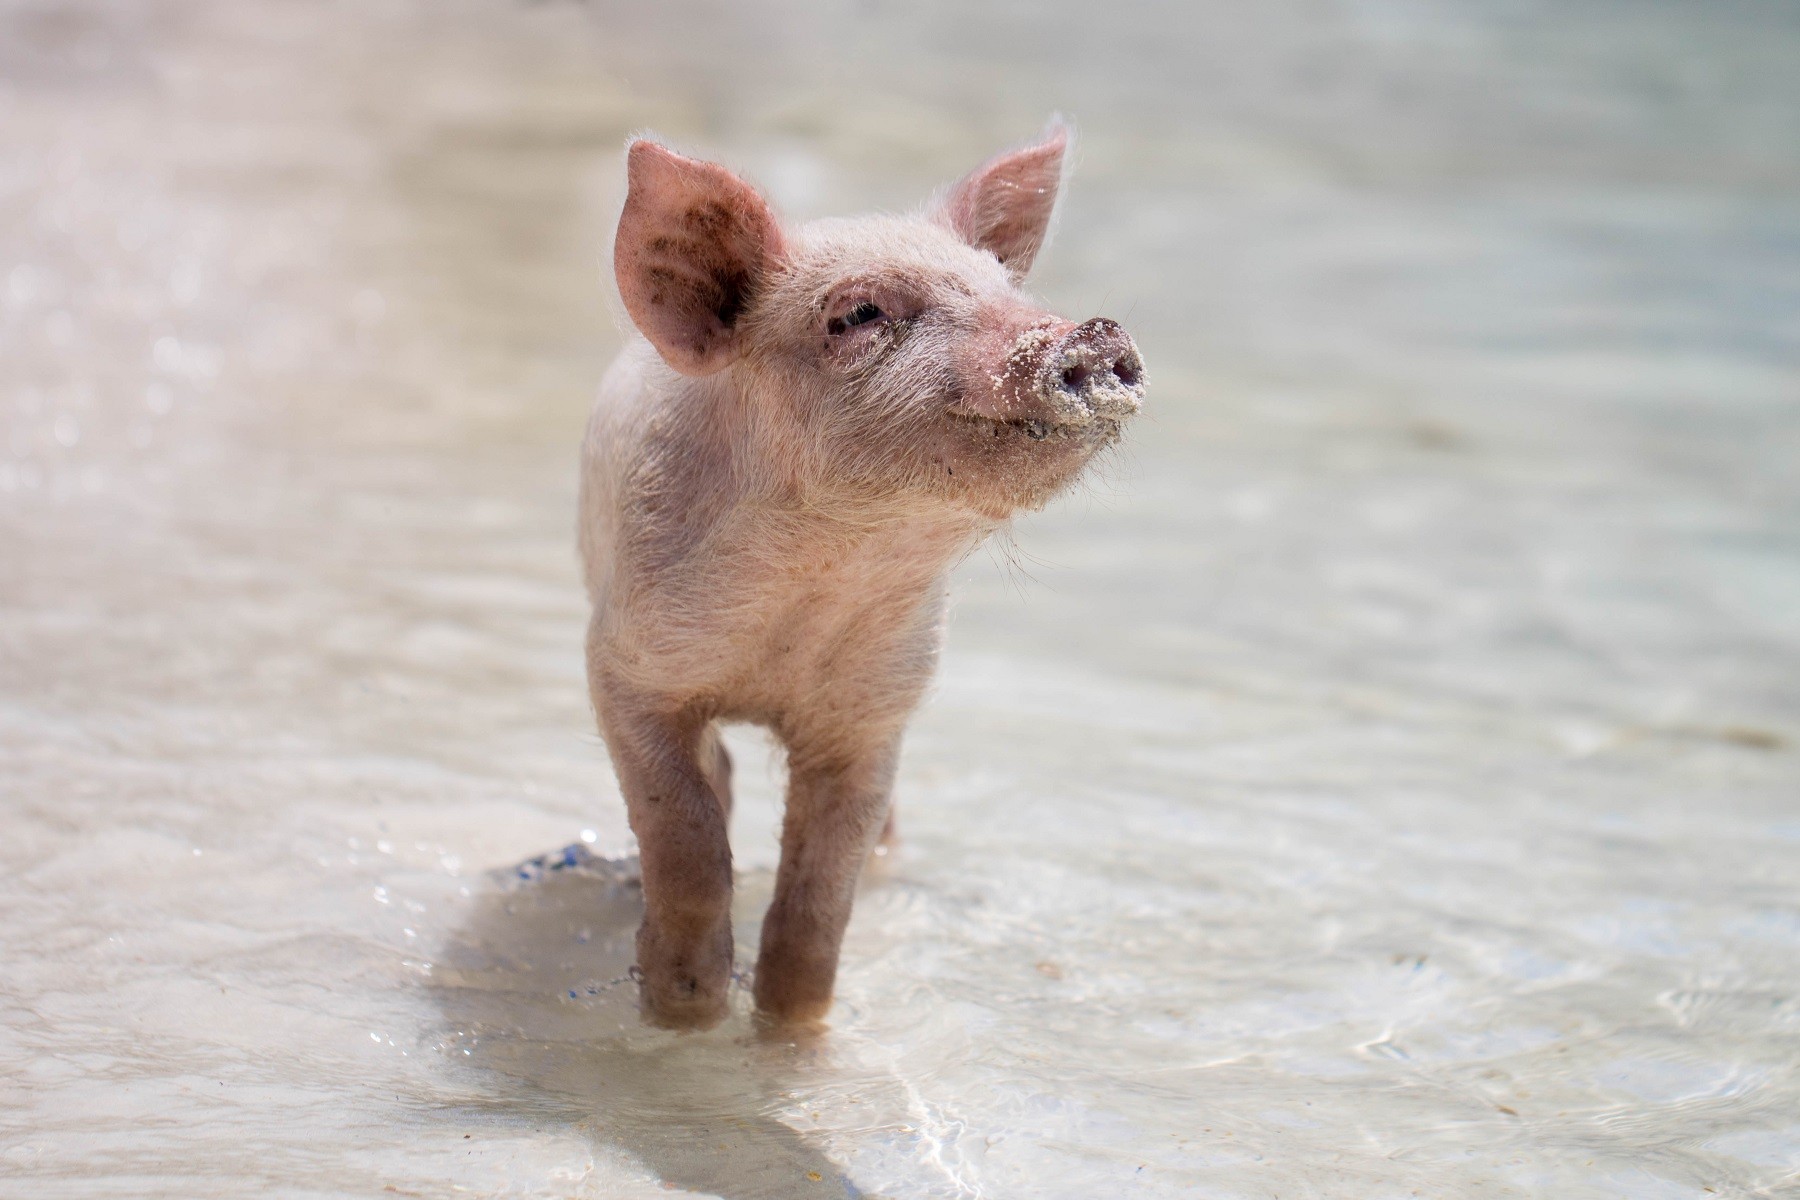 Piglet in water